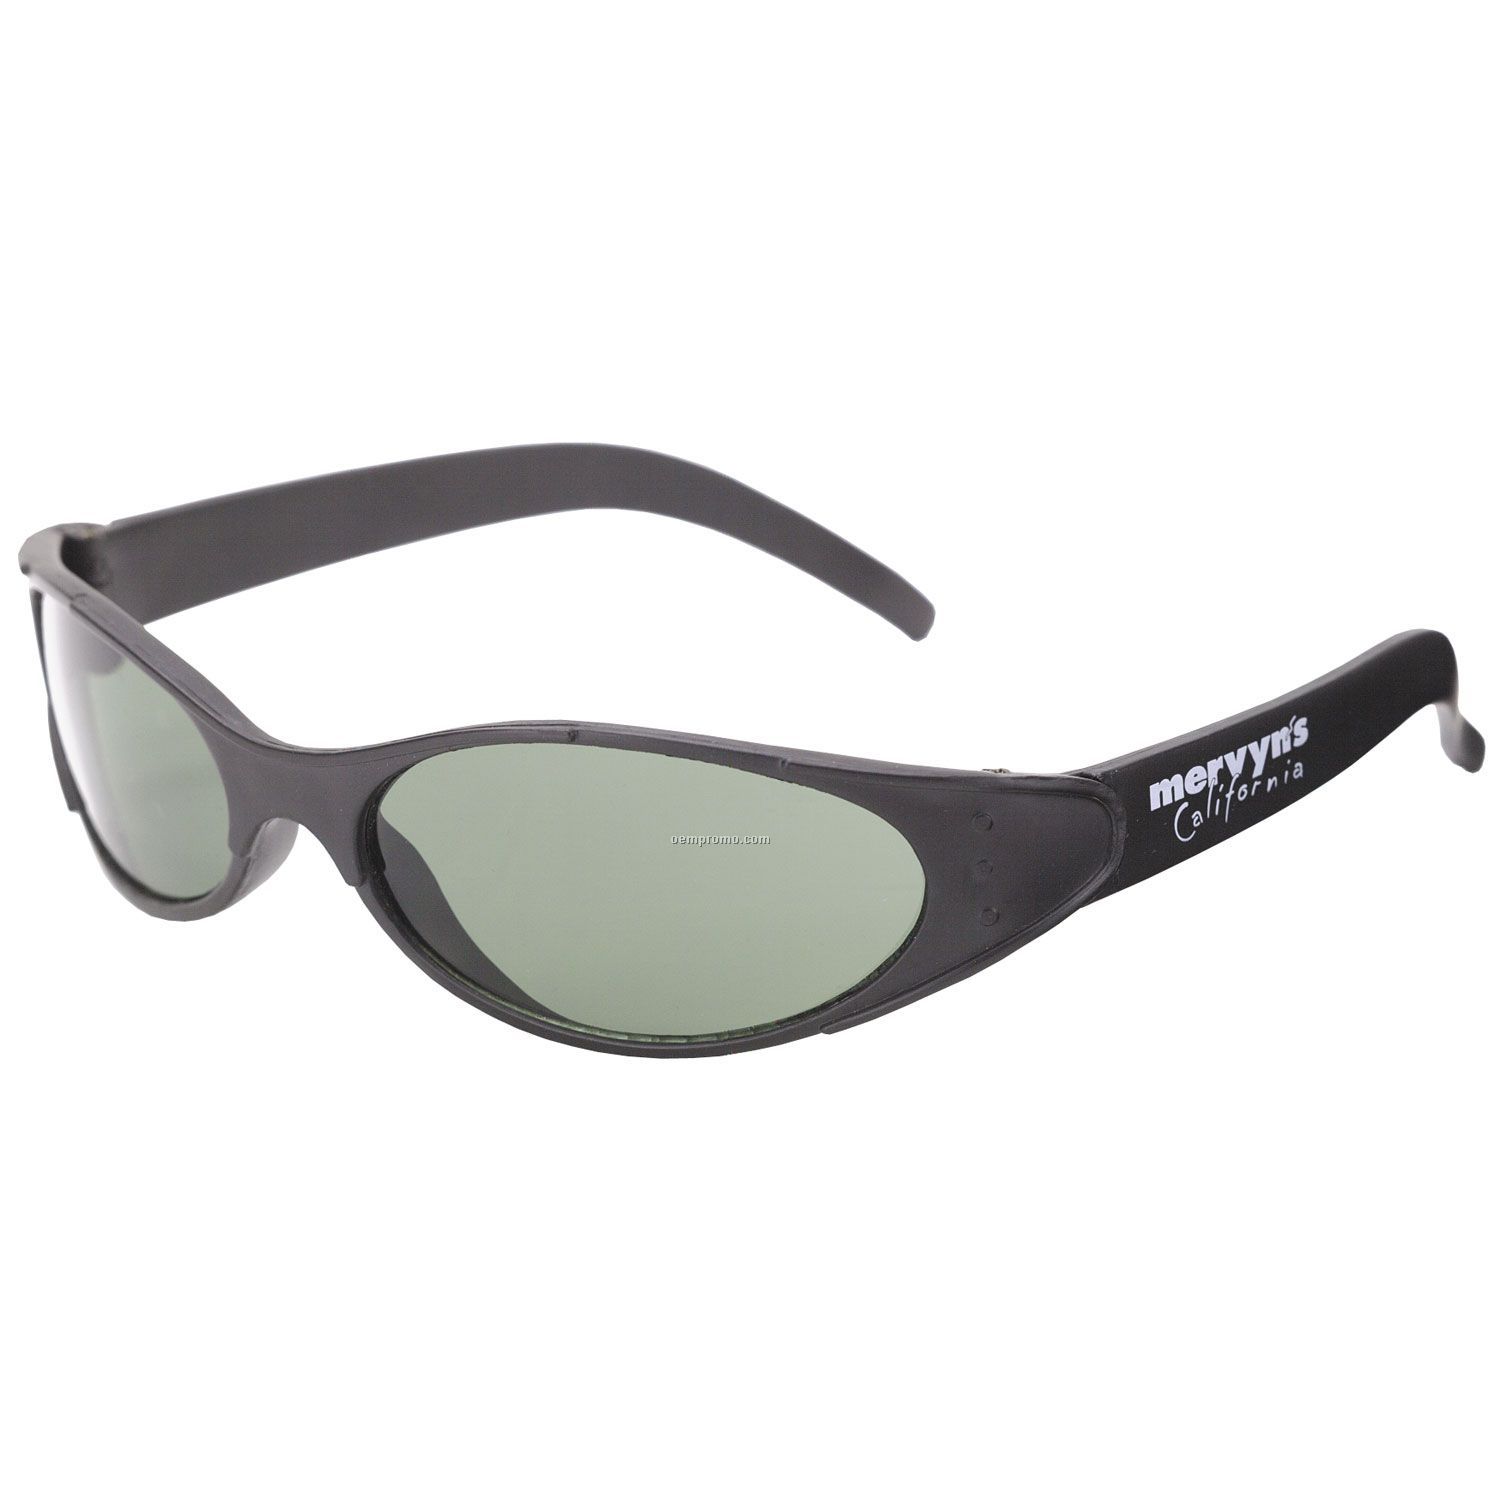 Turbo Wrap Matte Black Frame Sunglasses W/ Neutral Lens